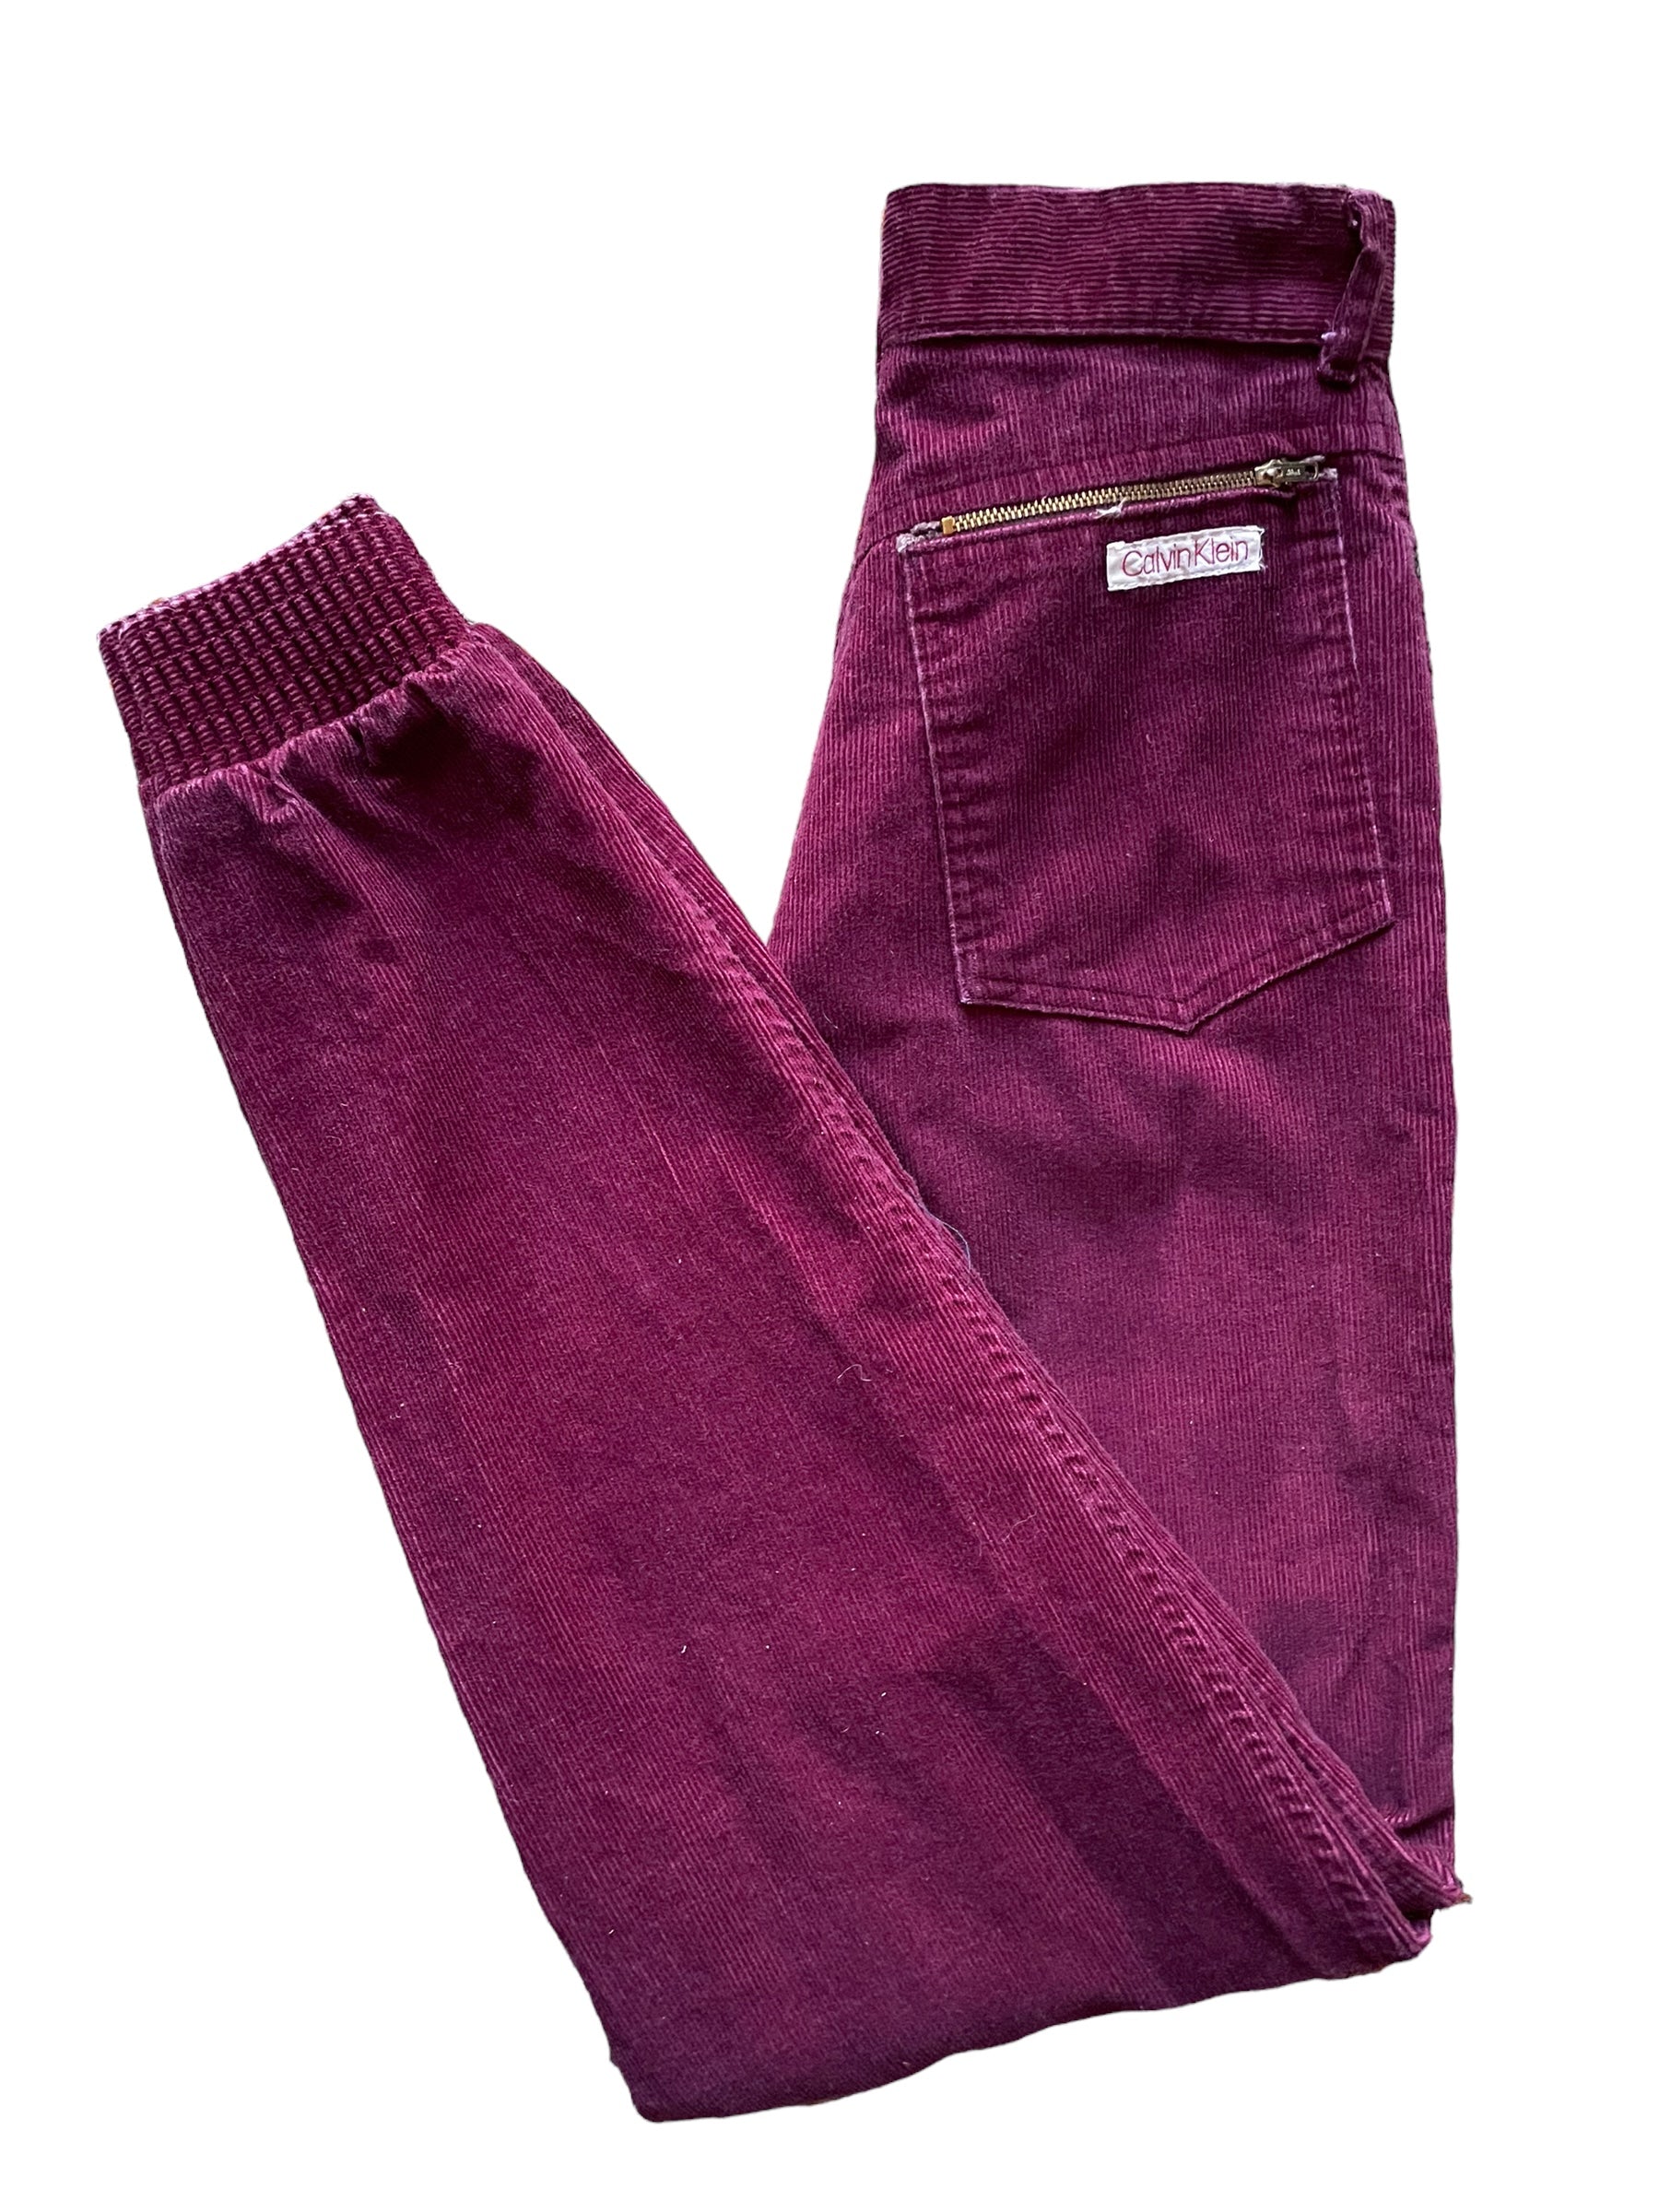 Folded view of Vintage 1970s Calvin Klein Corduroy Pants W26 | Barn Owl Vintage Seattle | Vintage Corduroy Pants